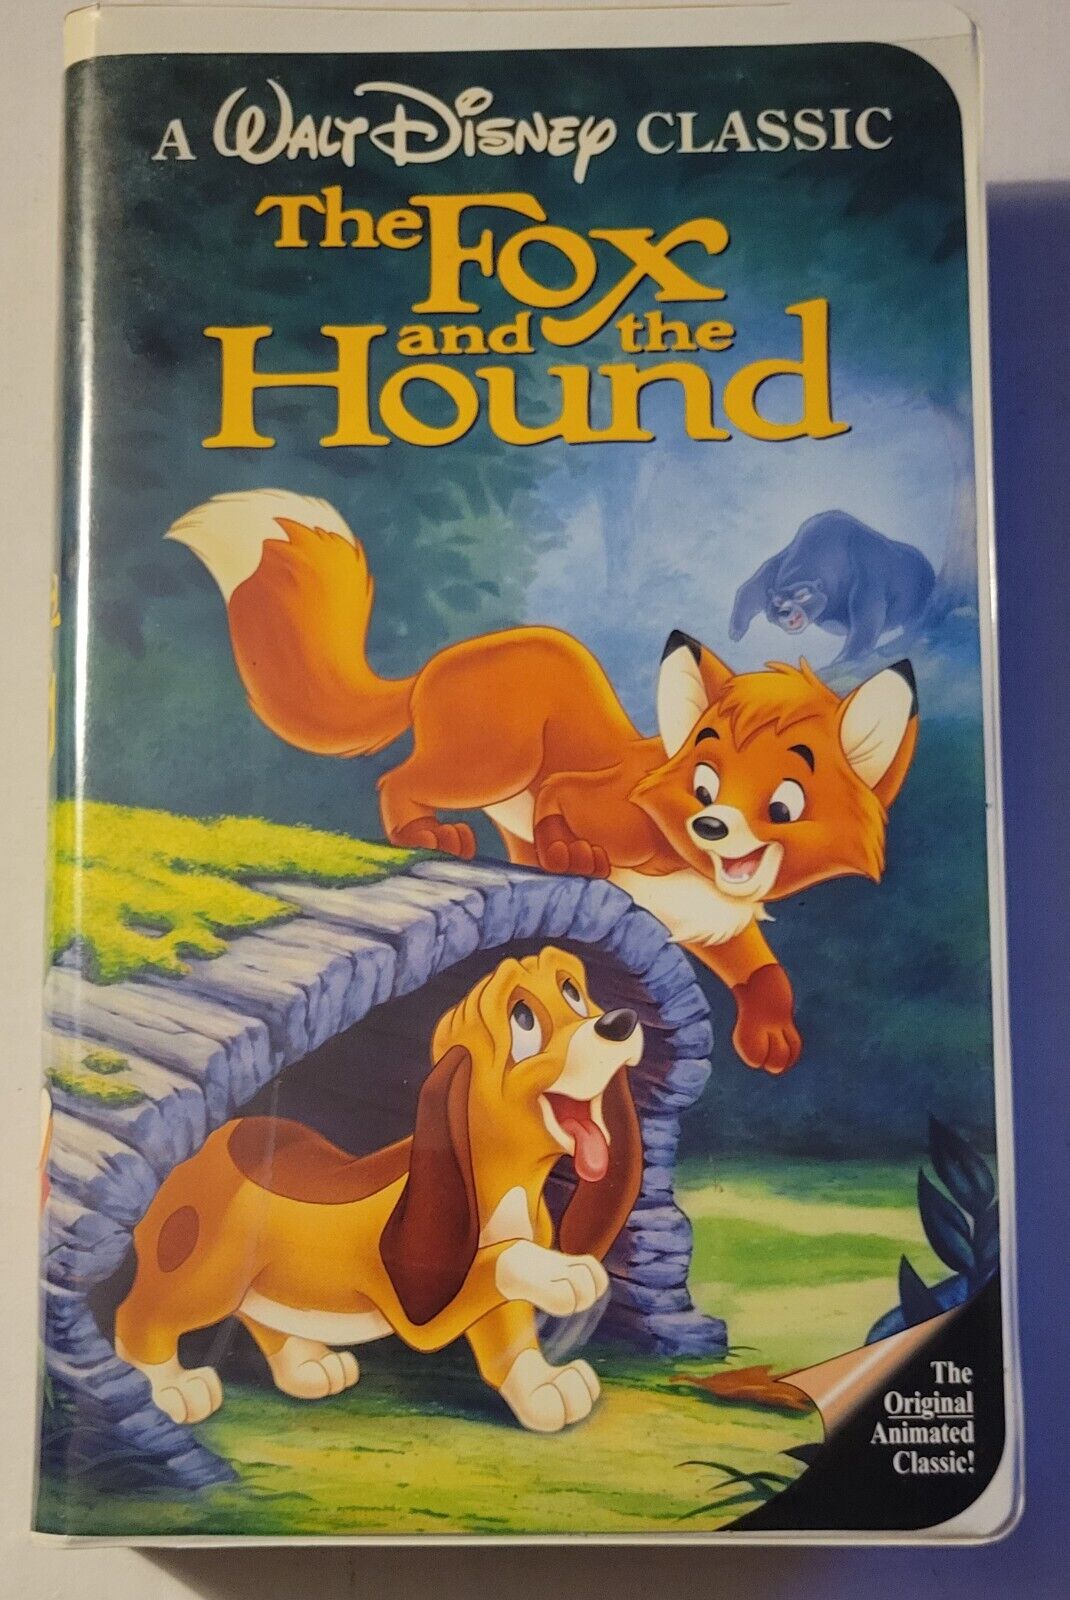 RARE Black Diamond Edition The Fox and the Hound VHS Tape - Walt Disney Classics